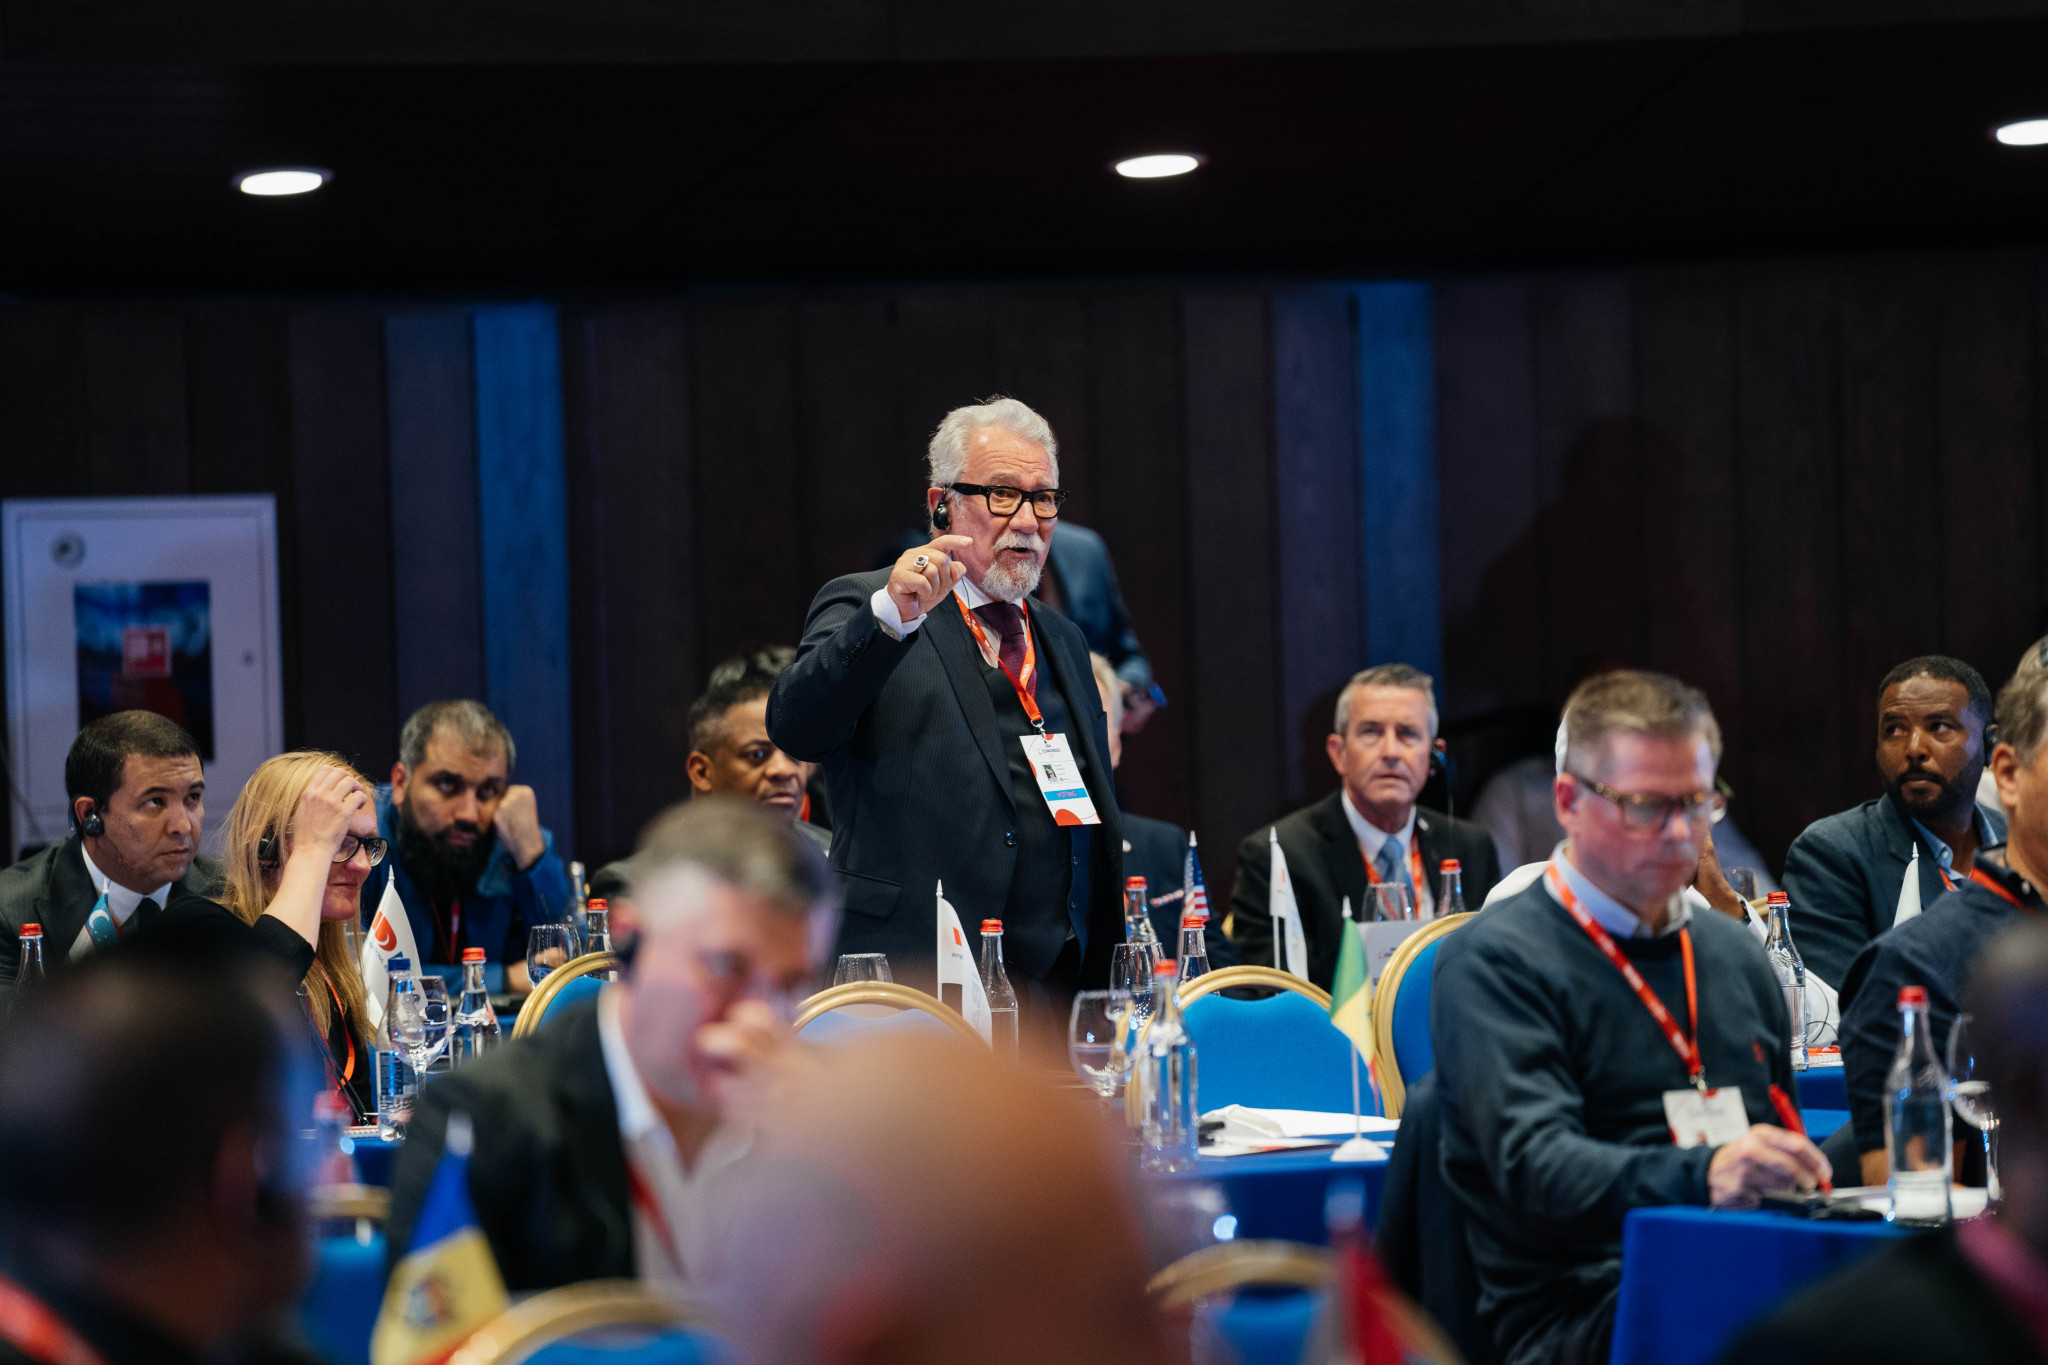 Swedish Boxing Federation President Per-Axel Sjöholm has described the outcome of the Extraordinary Congress as a 